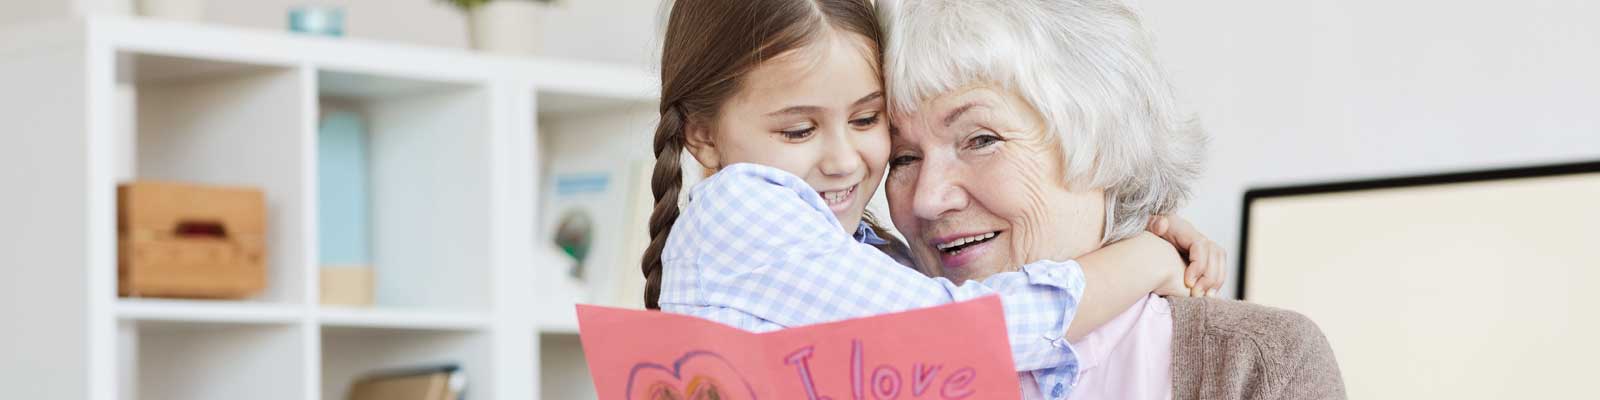 Best Gift Ideas for Seniors w/ Alzheimer's, Dementia and Memory Loss